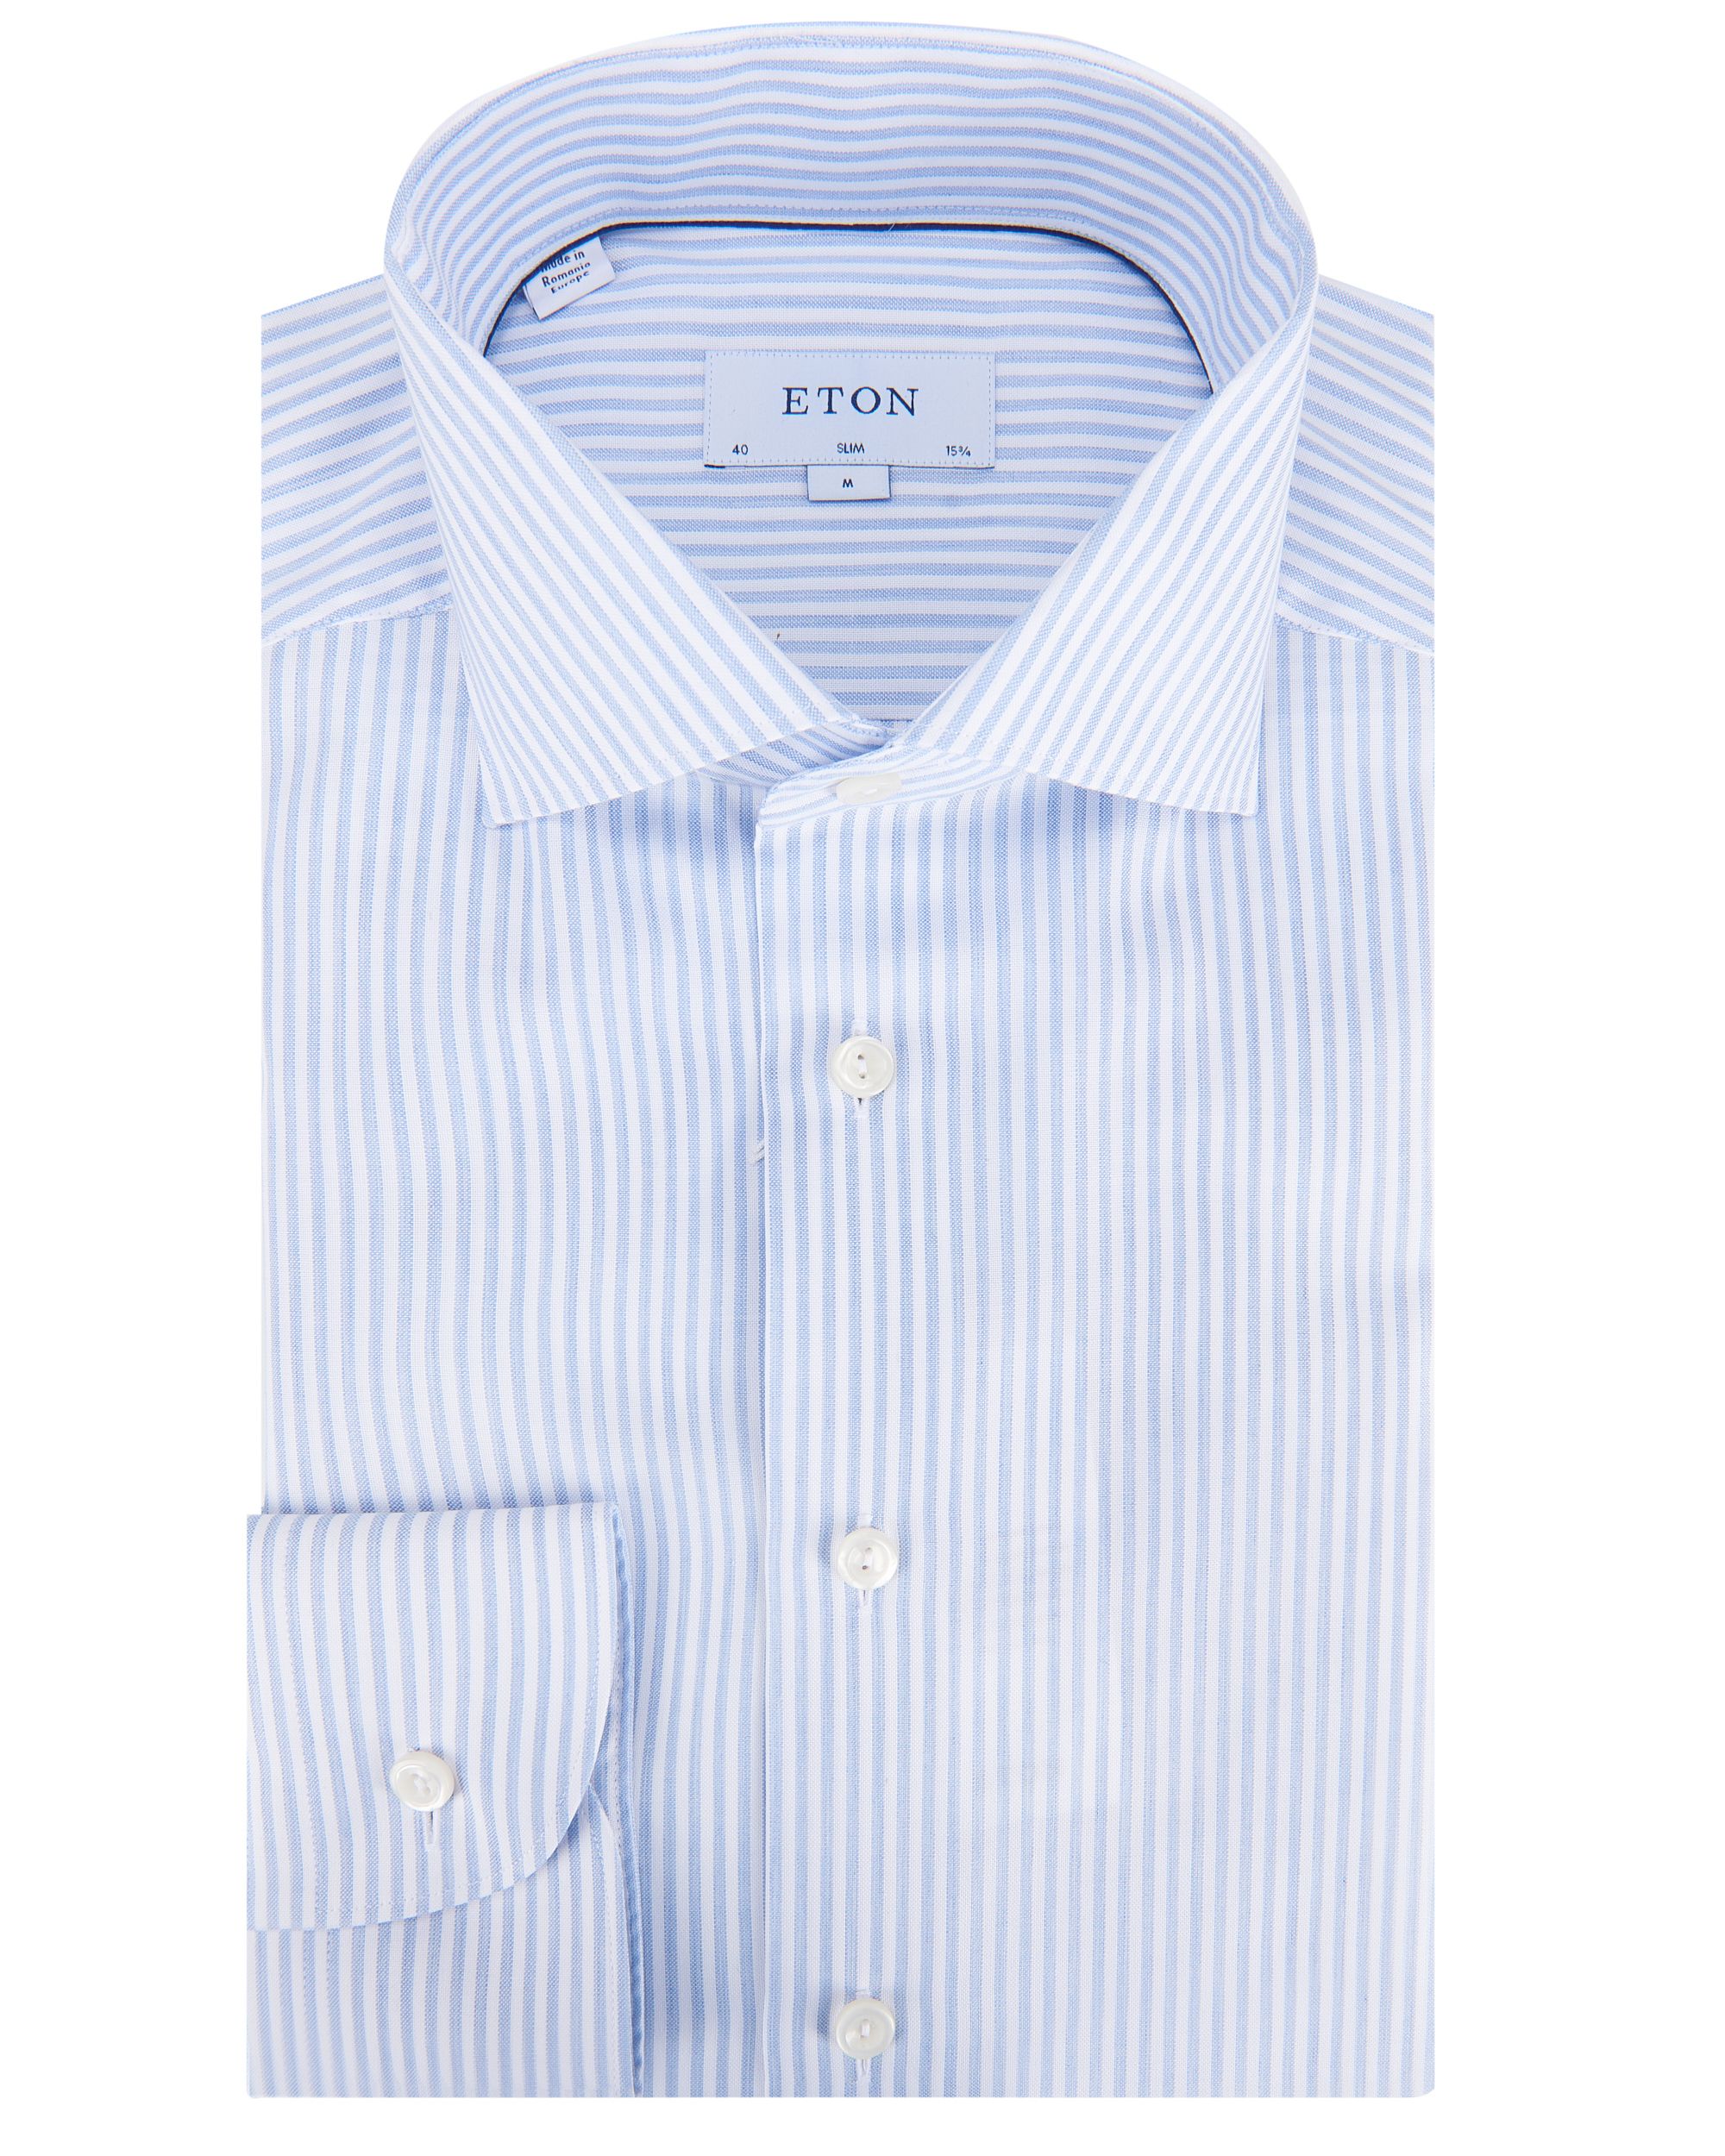 ETON Overhemd LM Blauw streep 082181-001-37/38